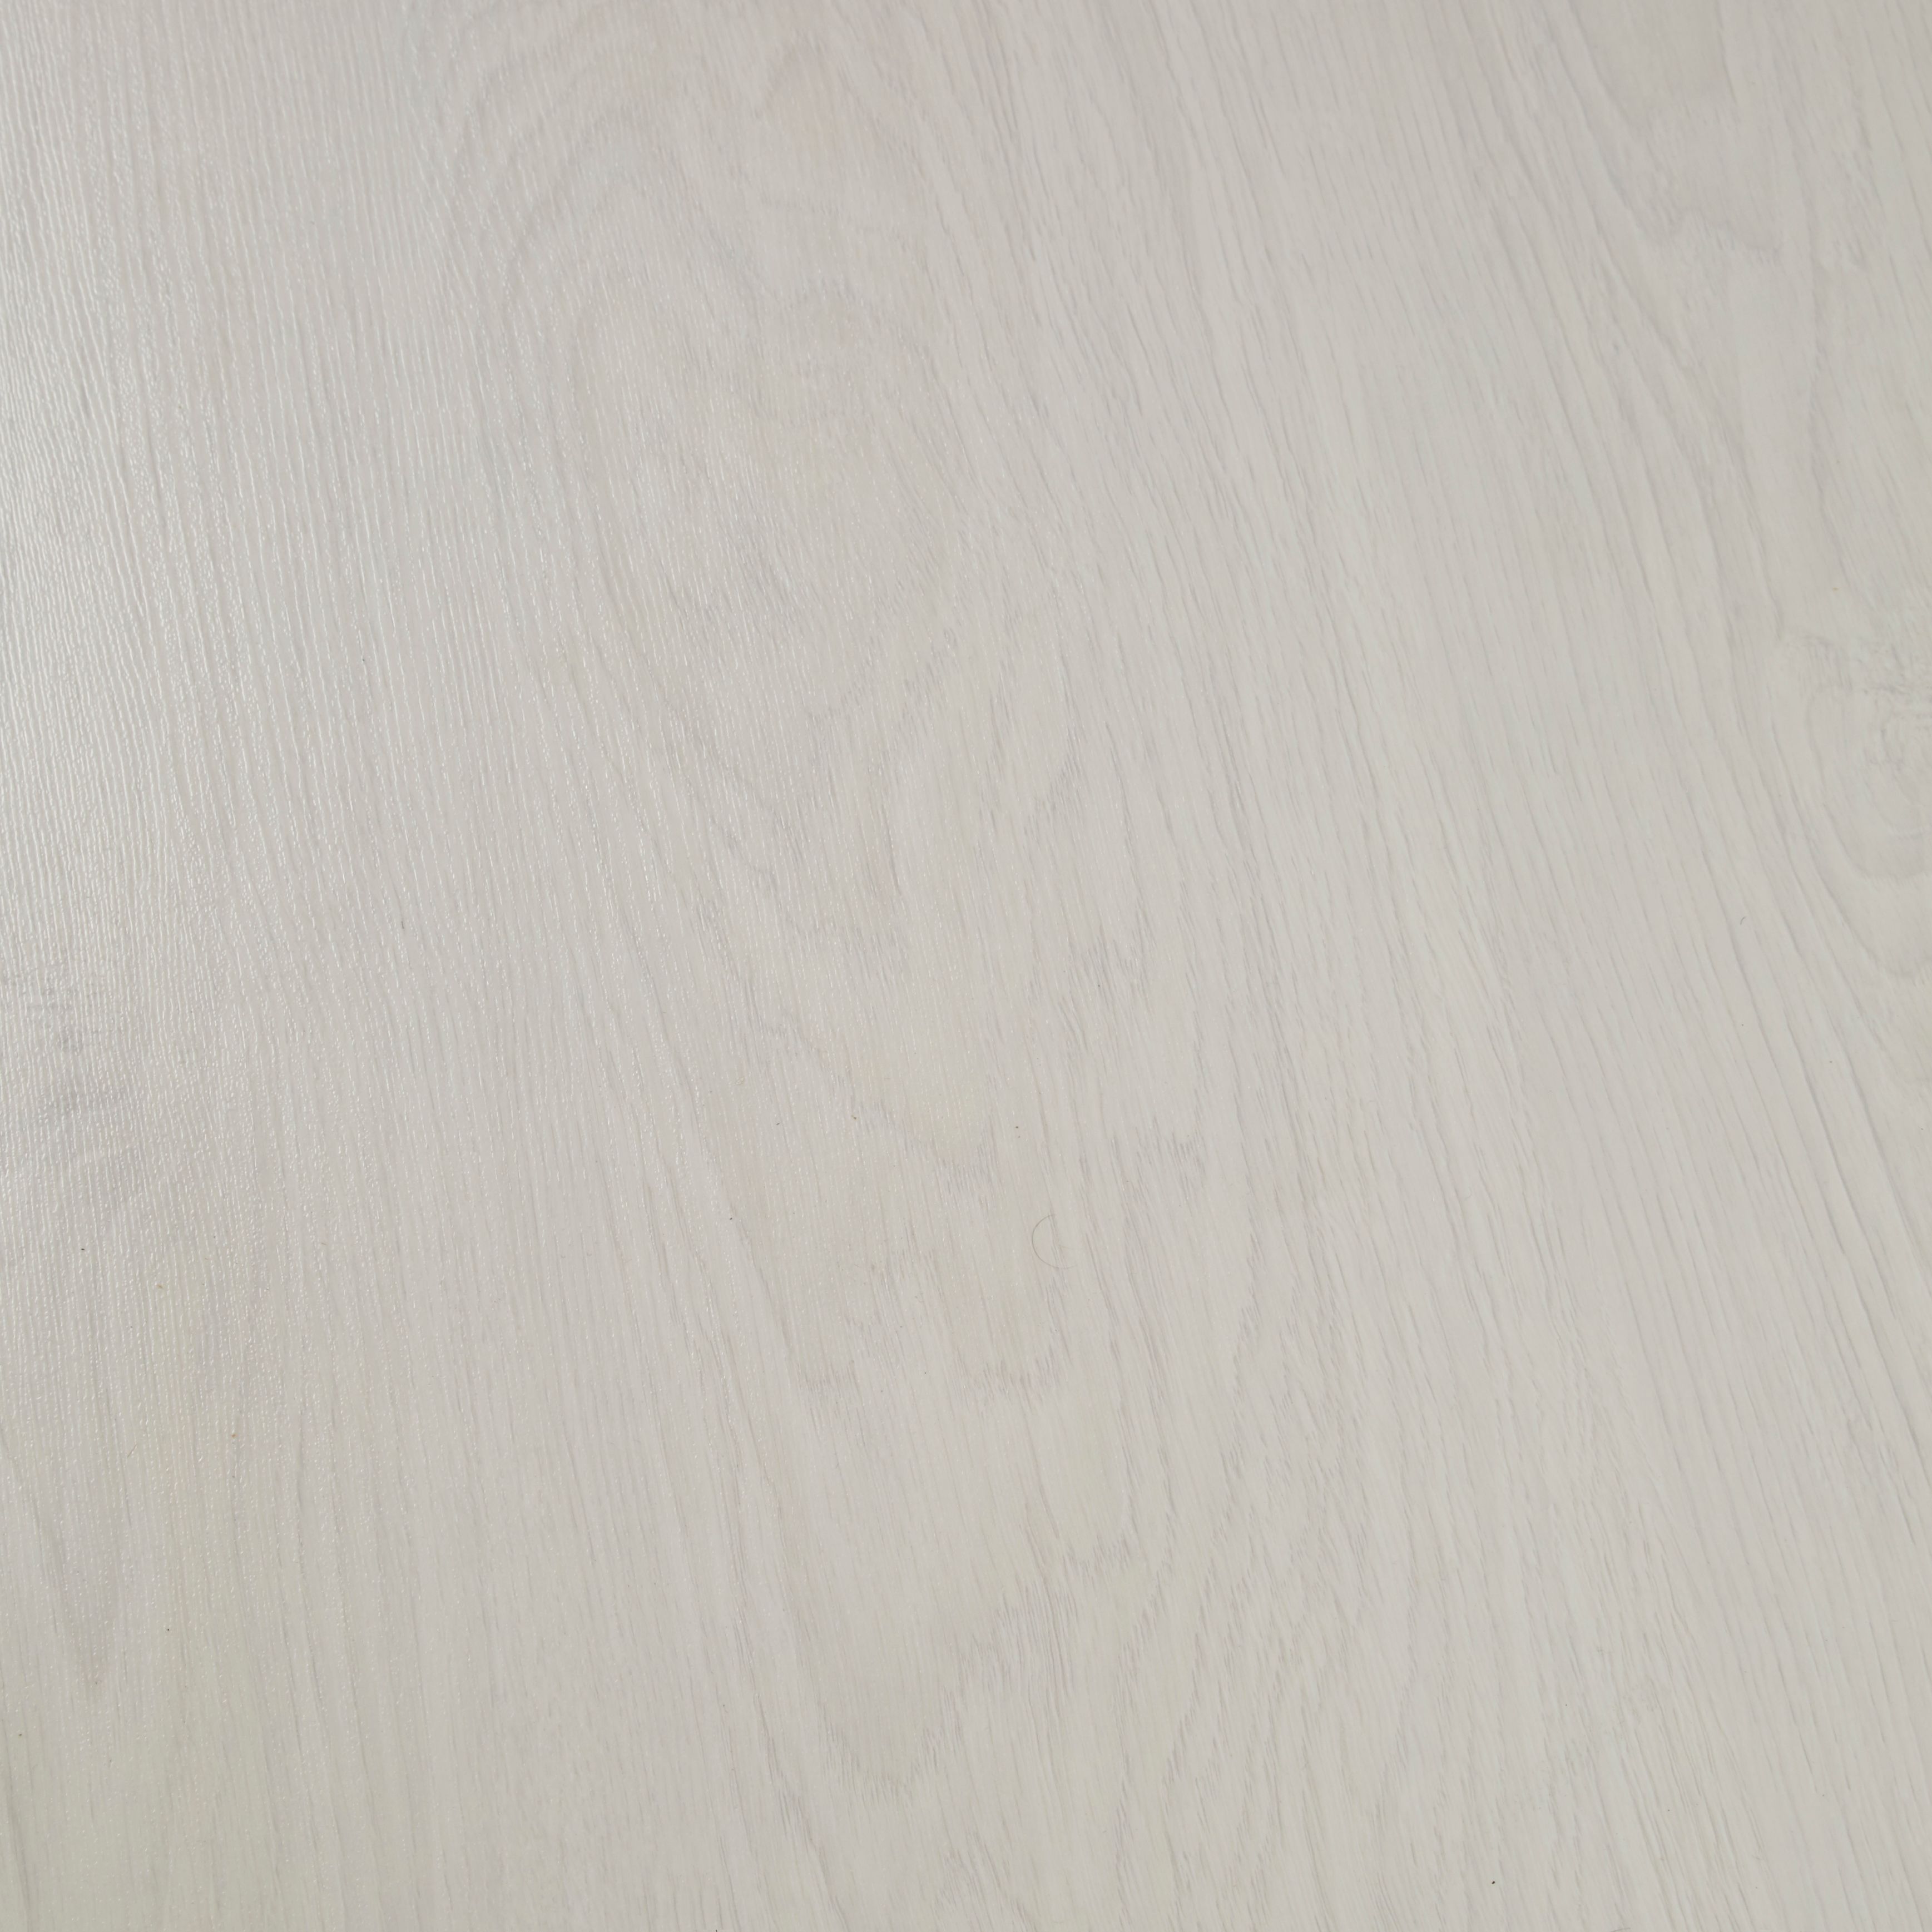 GoodHome Ballarat White Oak effect Laminate Flooring, 2.47m²